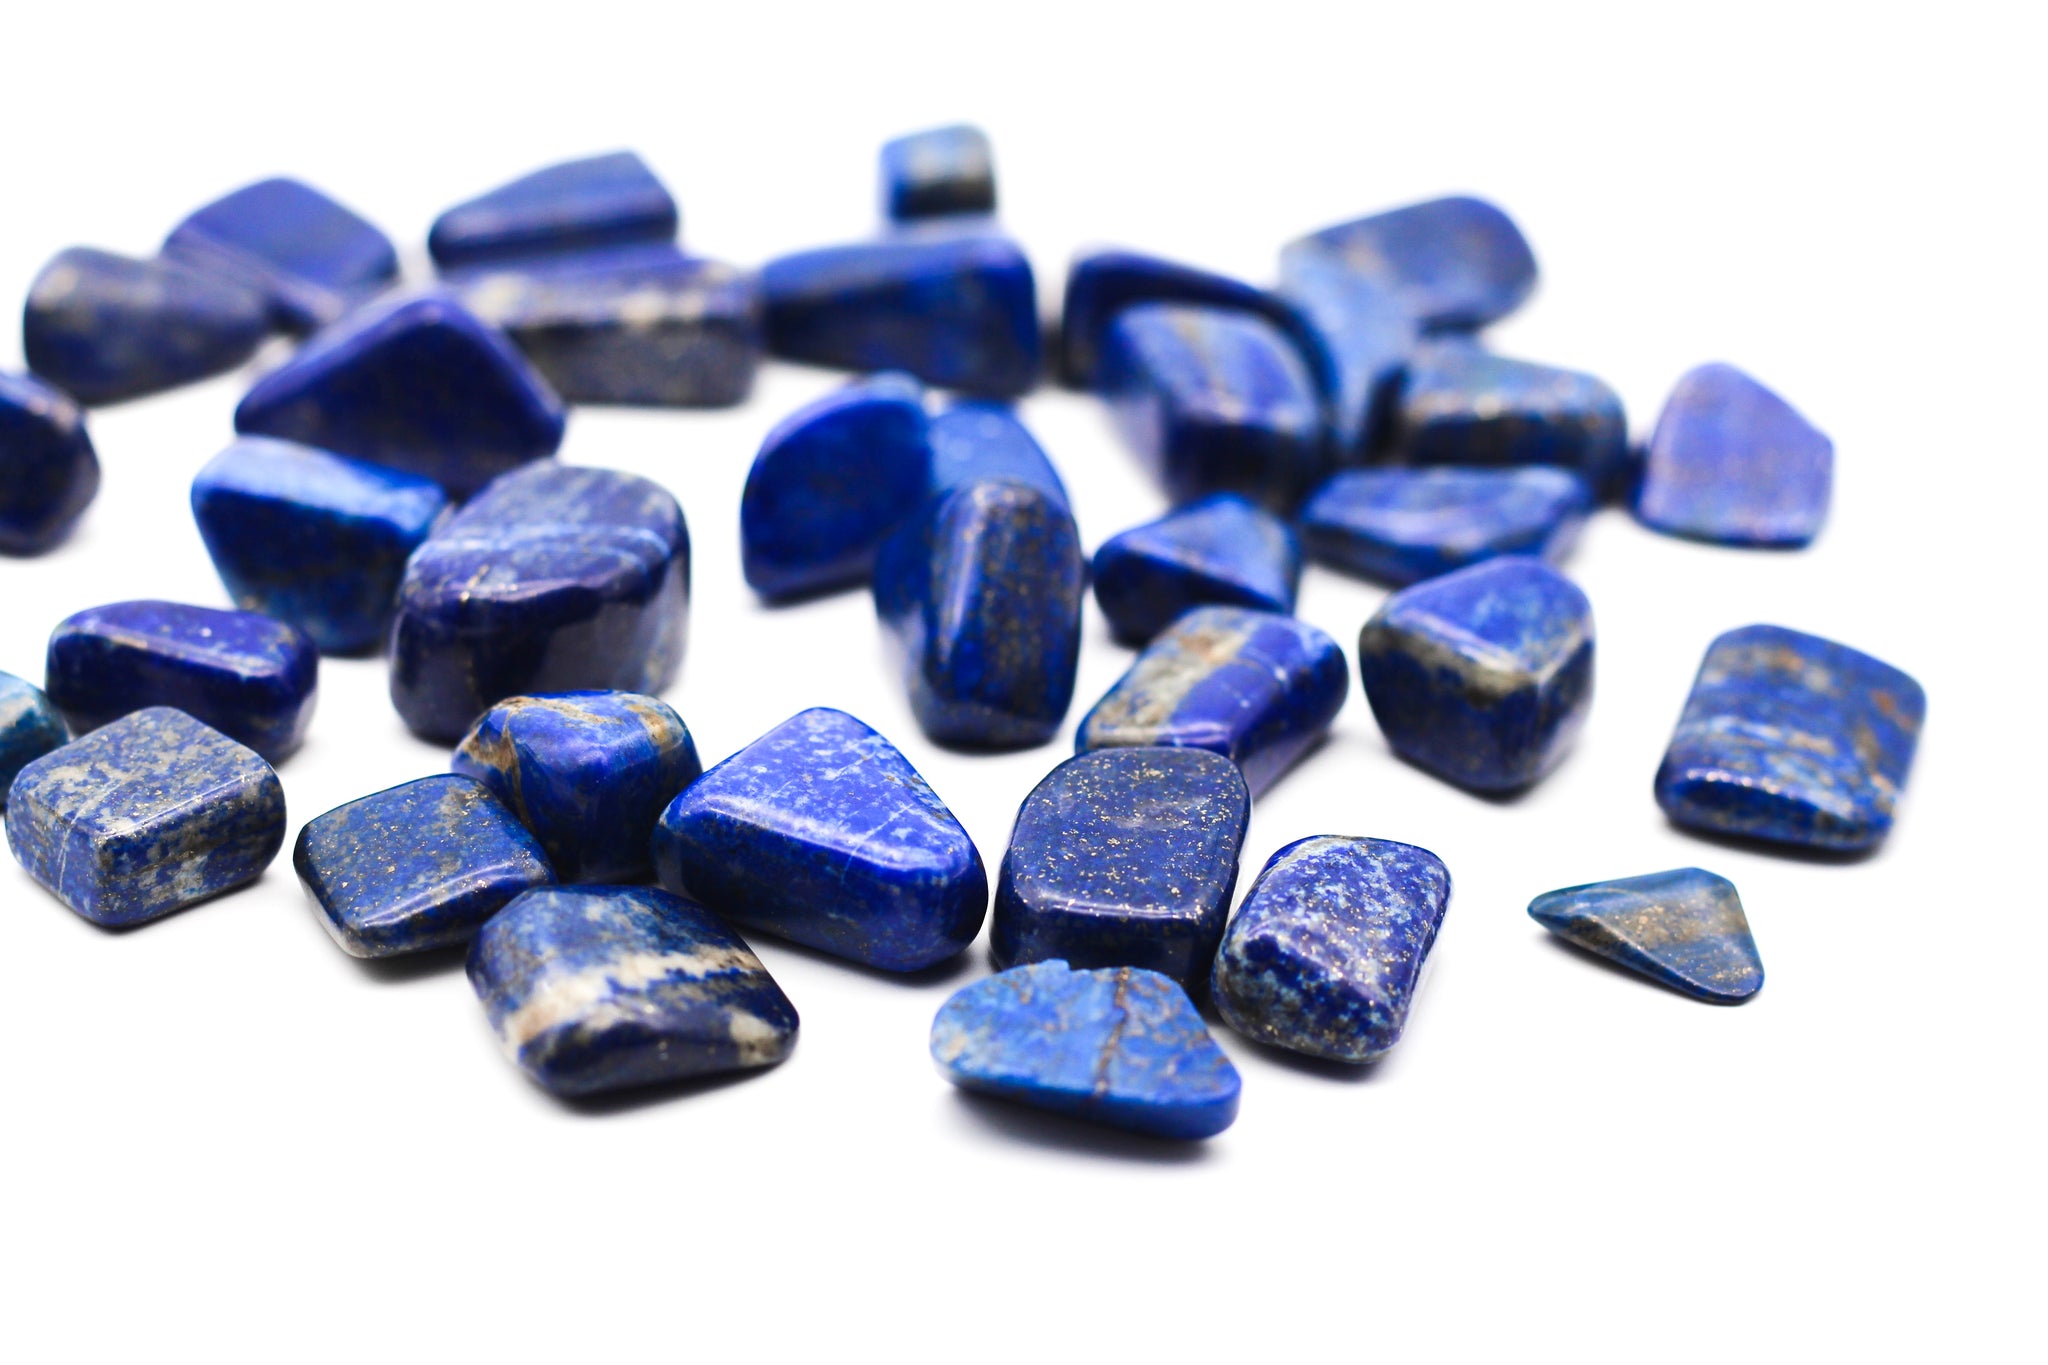 Cobalto Calcite Tumbled Stone - Grade A